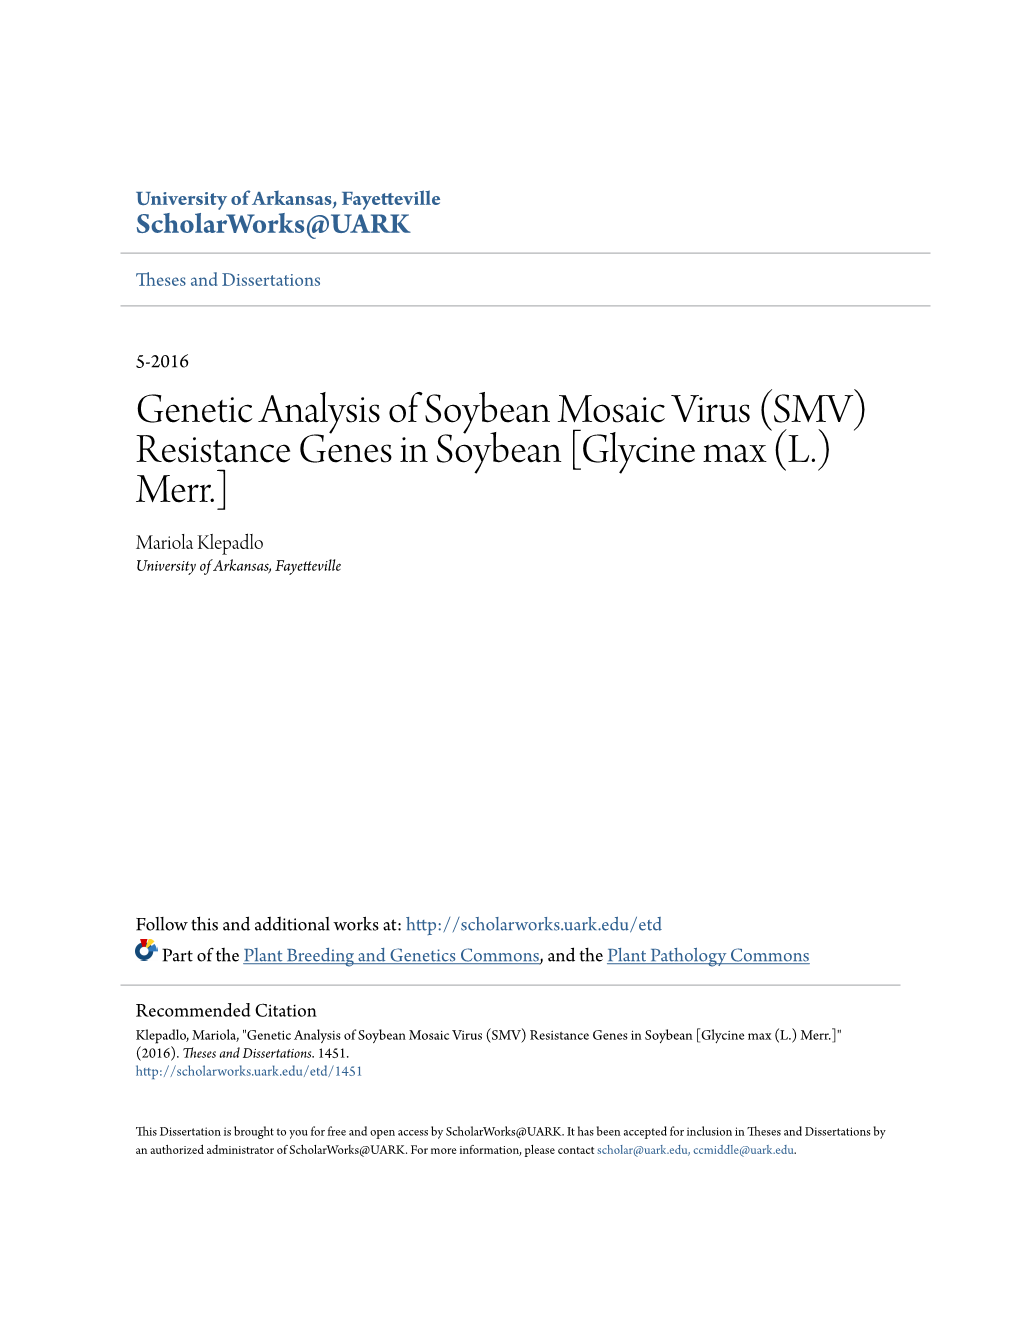 Genetic Analysis of Soybean Mosaic Virus (SMV) Resistance Genes in Soybean [Glycine Max (L.) Merr.] Mariola Klepadlo University of Arkansas, Fayetteville